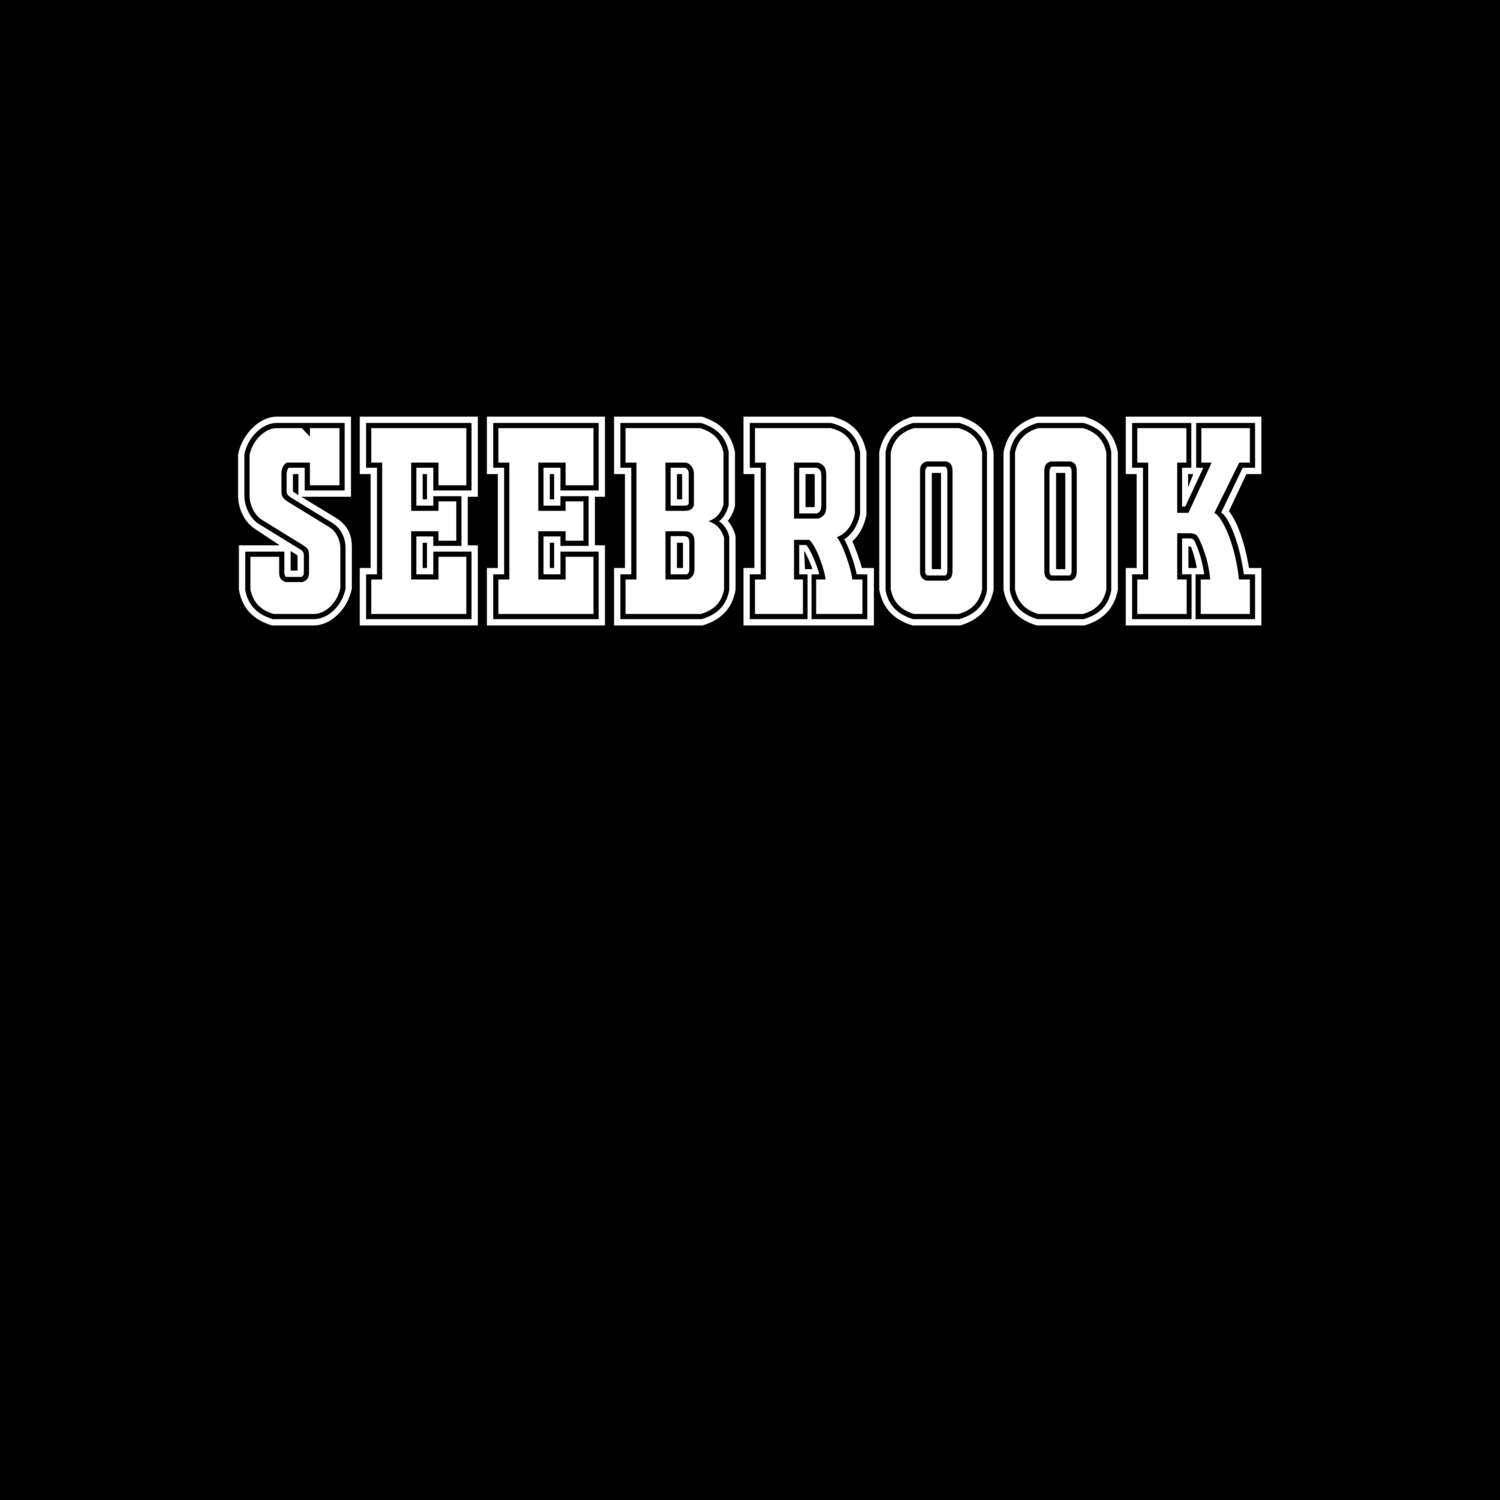 Seebrook T-Shirt »Classic«